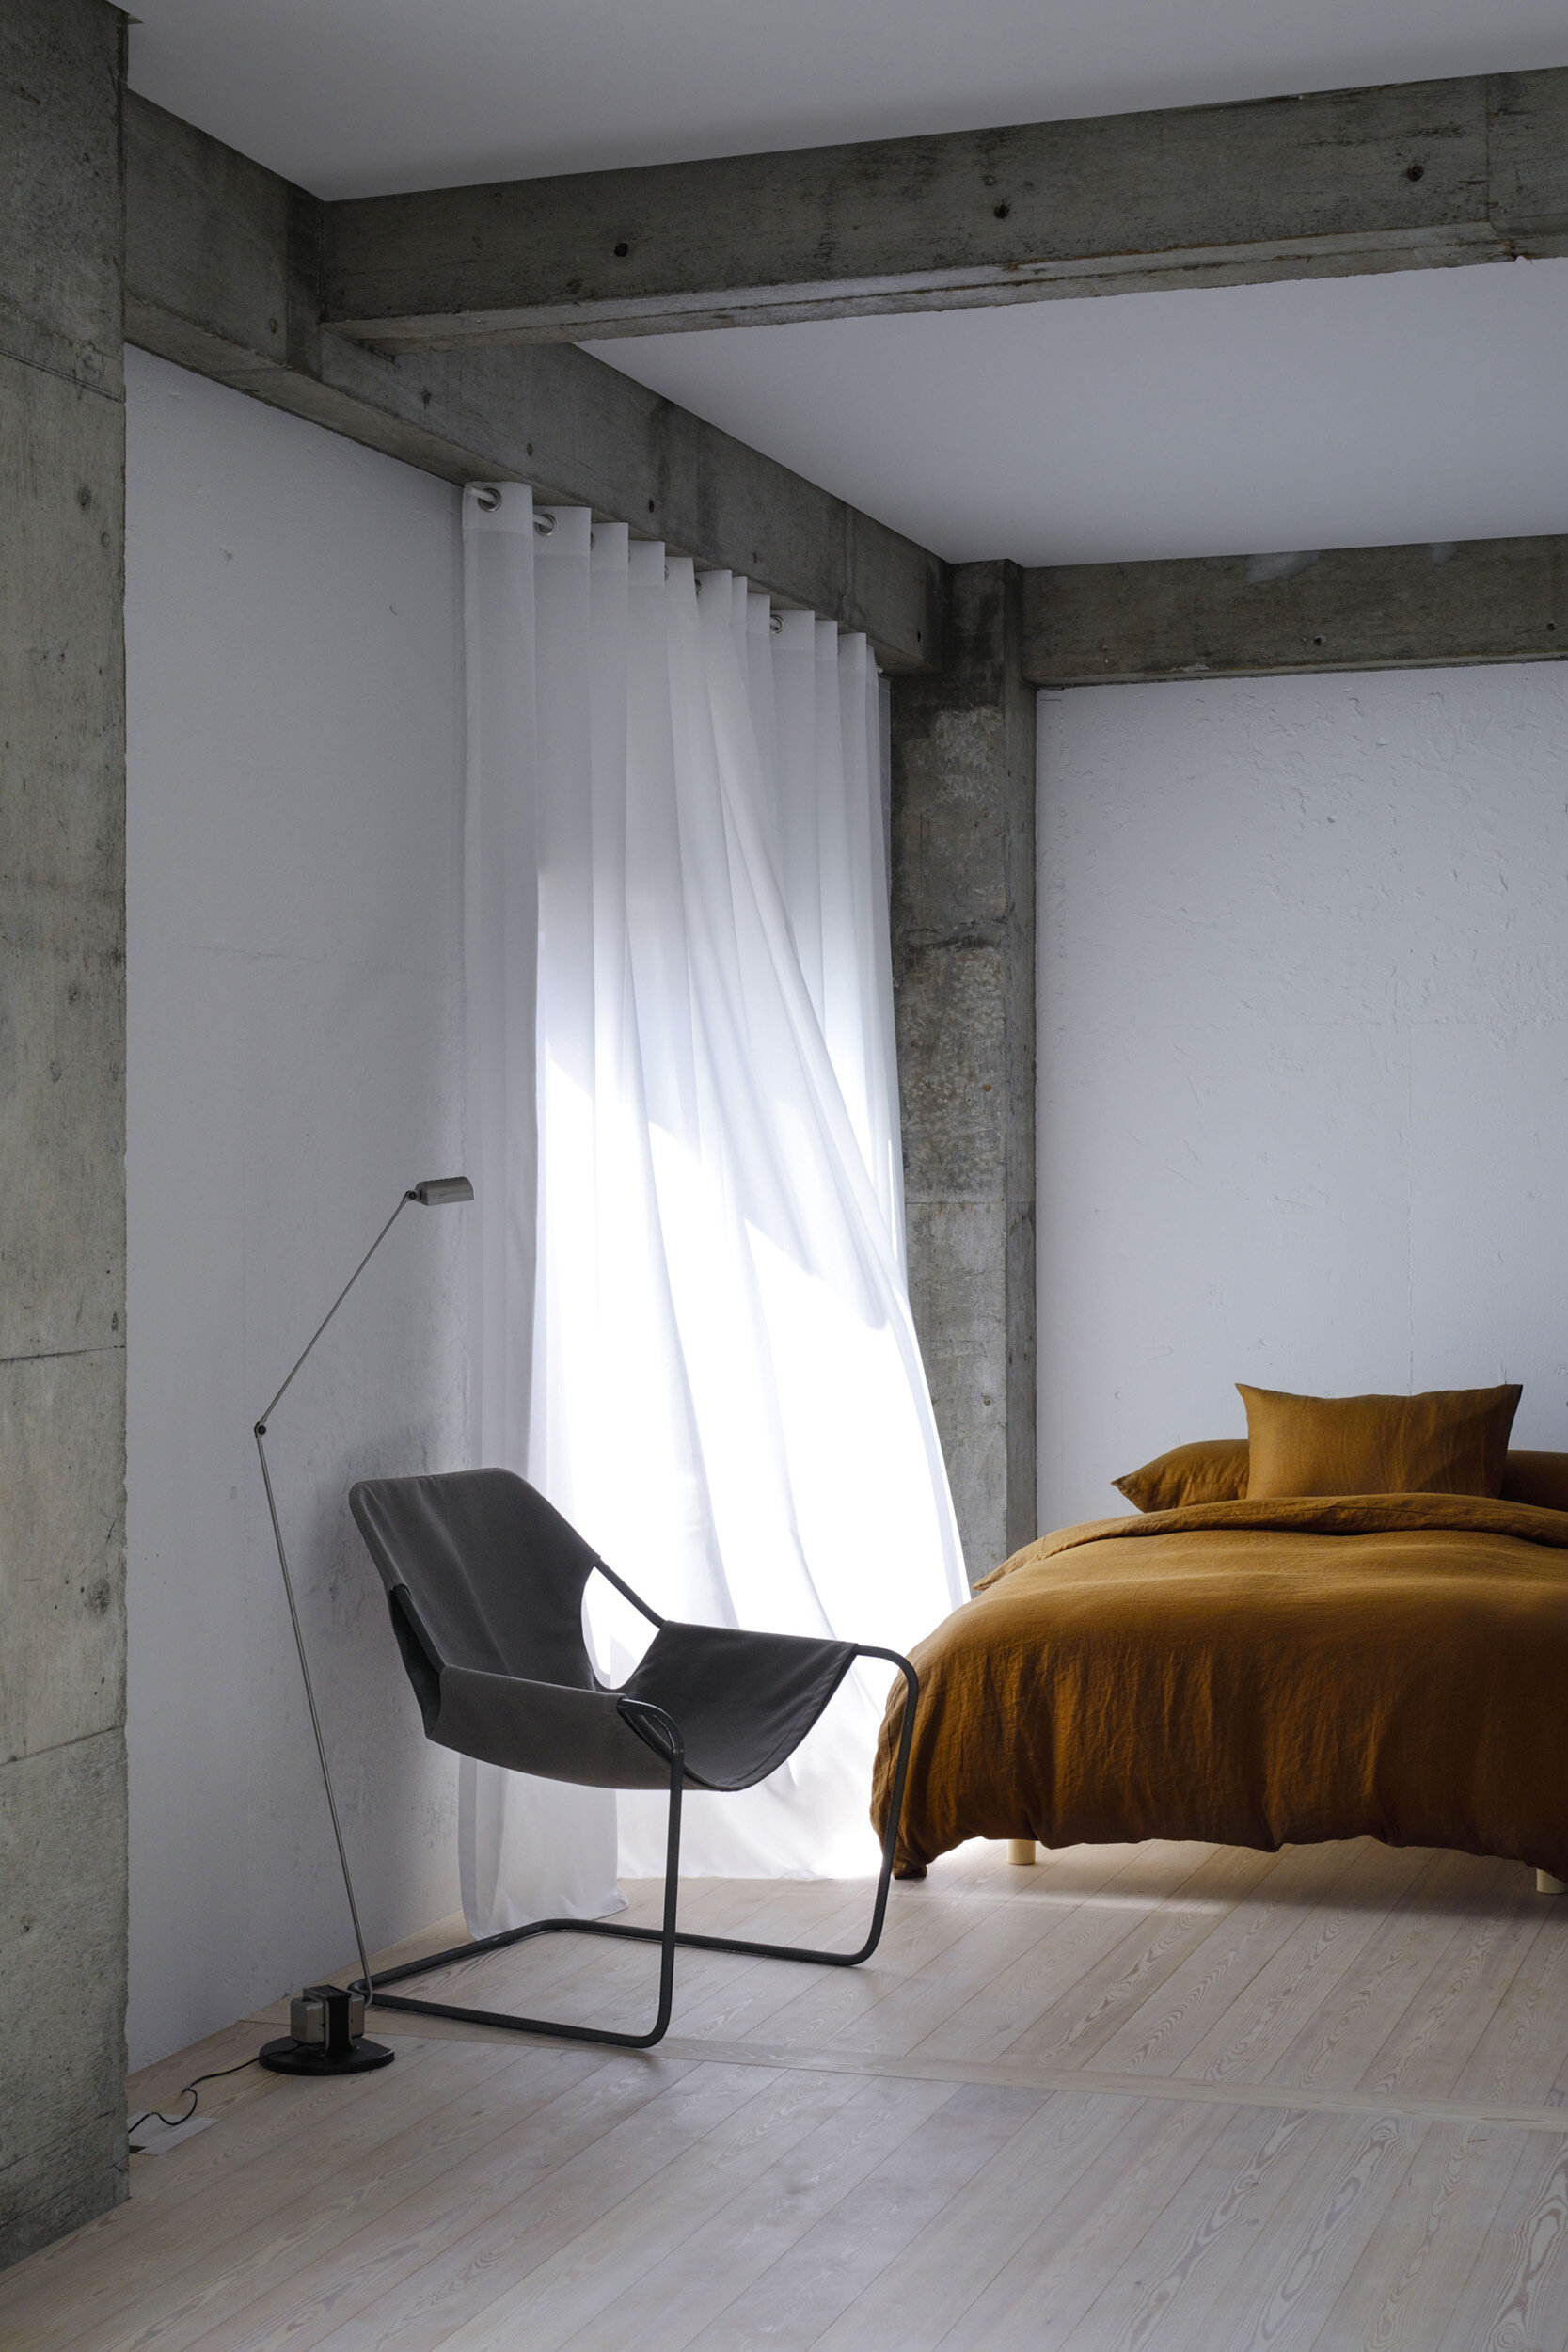  A master bedroom of ISLAND LIVING designed by Hiroyuki Ogura/DRAWERS.  